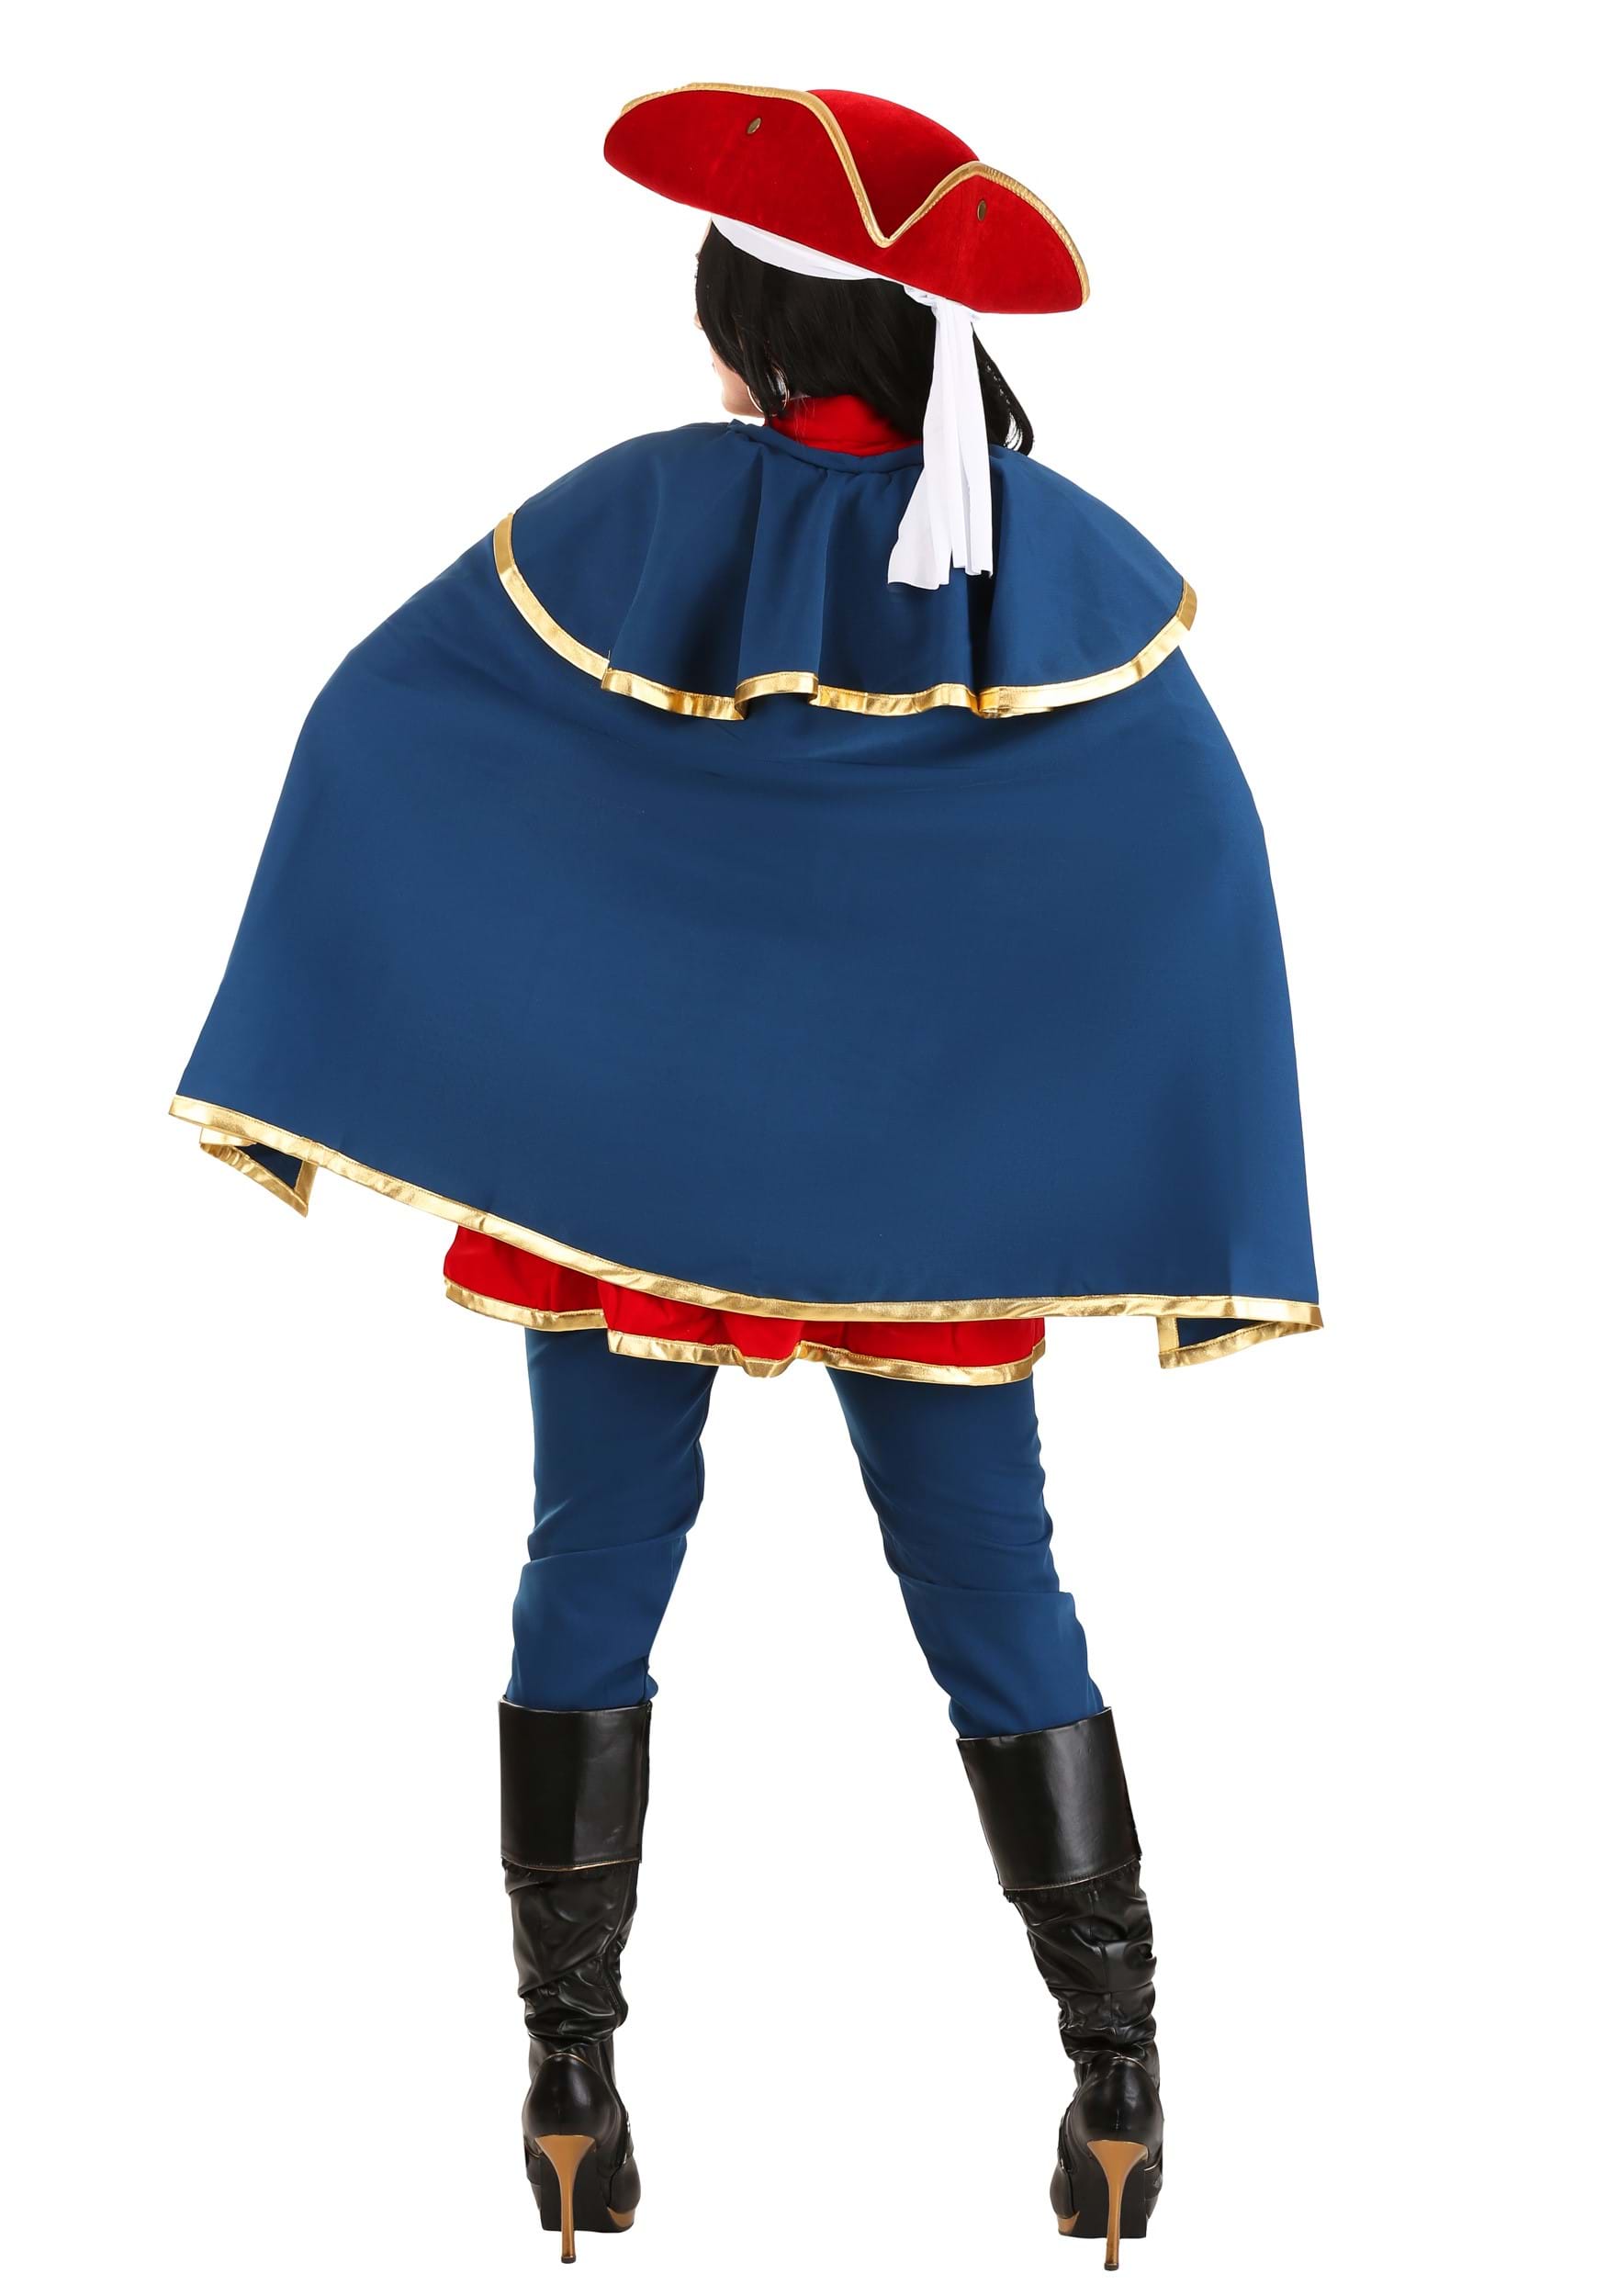 Captain Pirate Fancy Dress Costume For Women